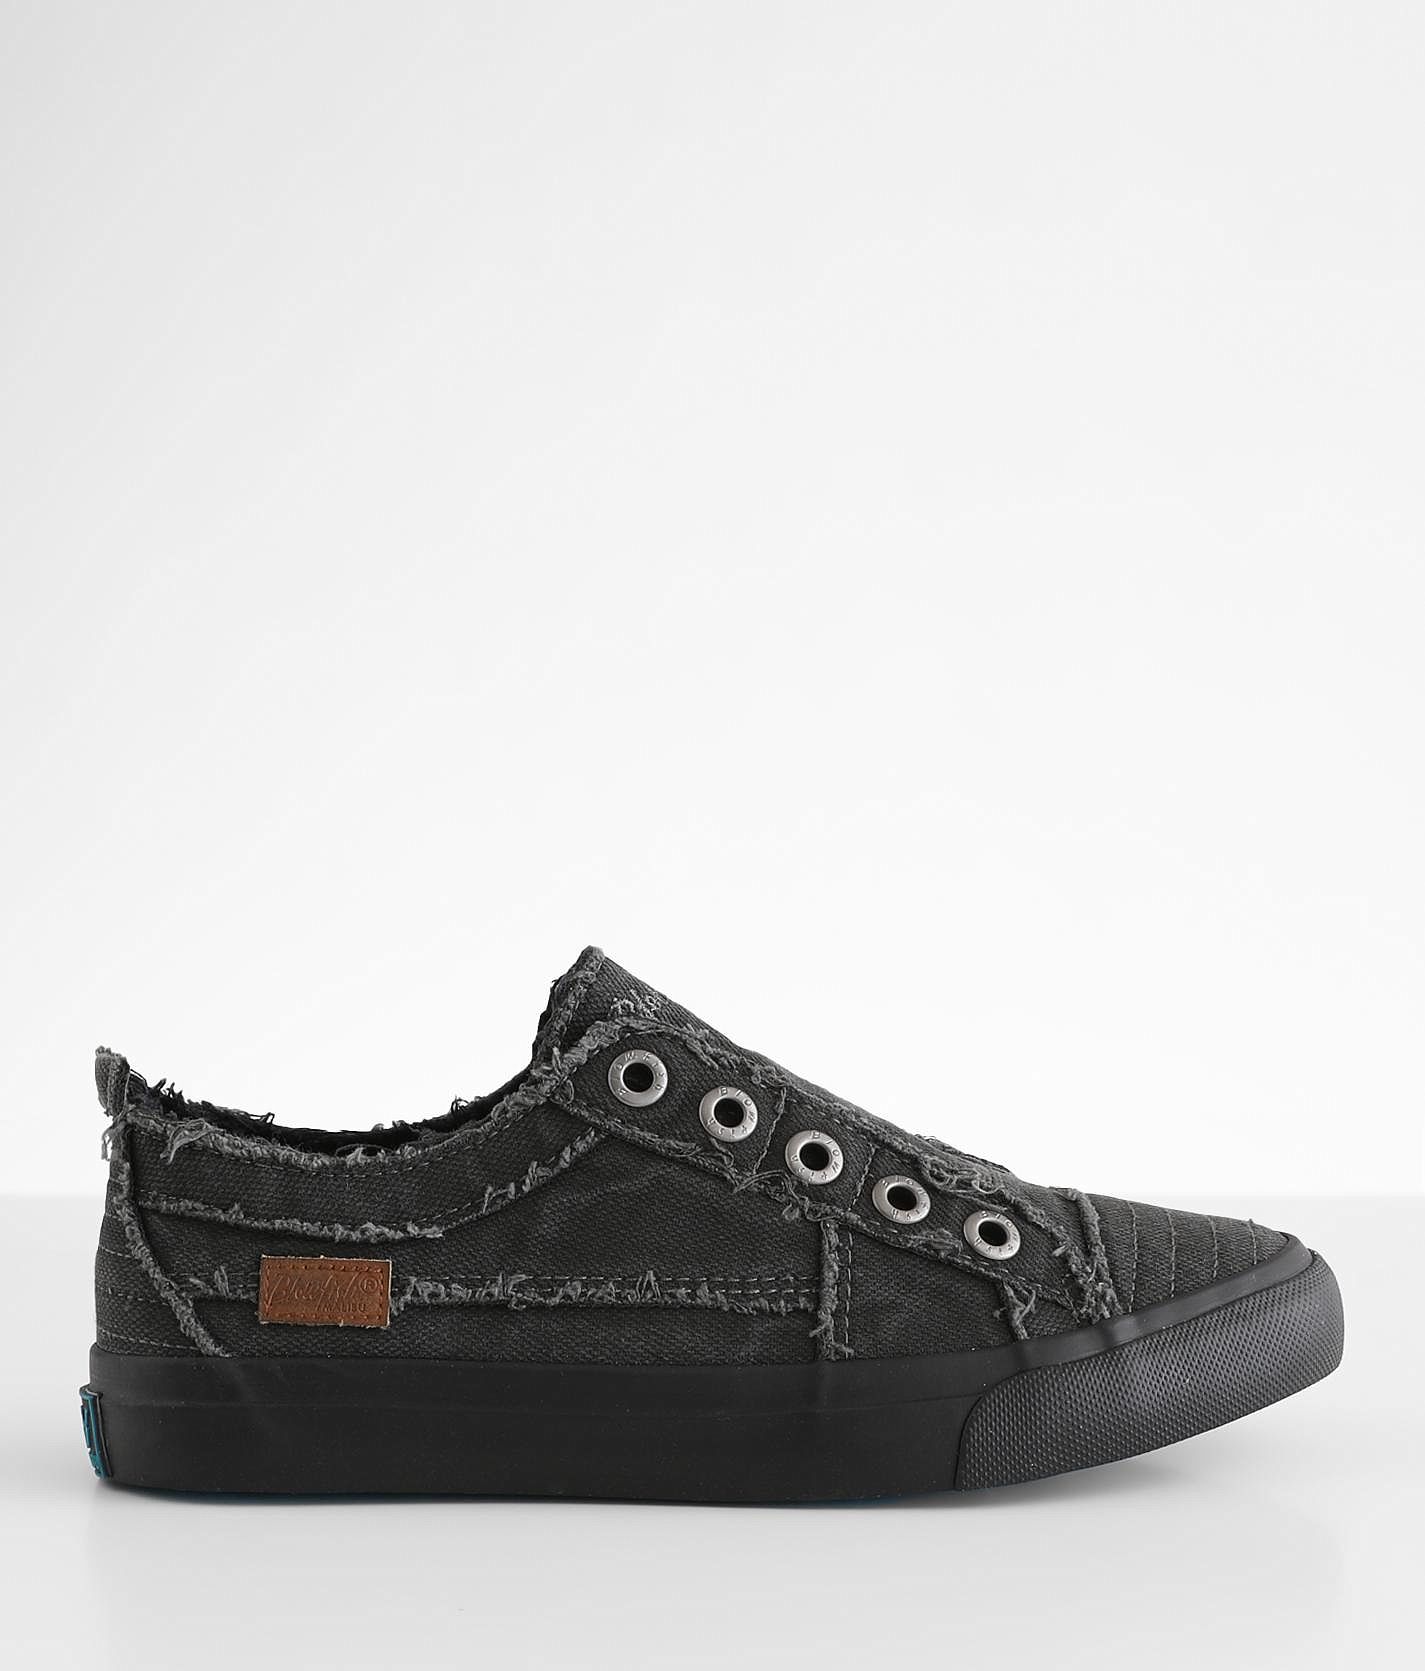 Blowfish Malibu Play Sneaker - Women's Shoes in Black Smoked Black